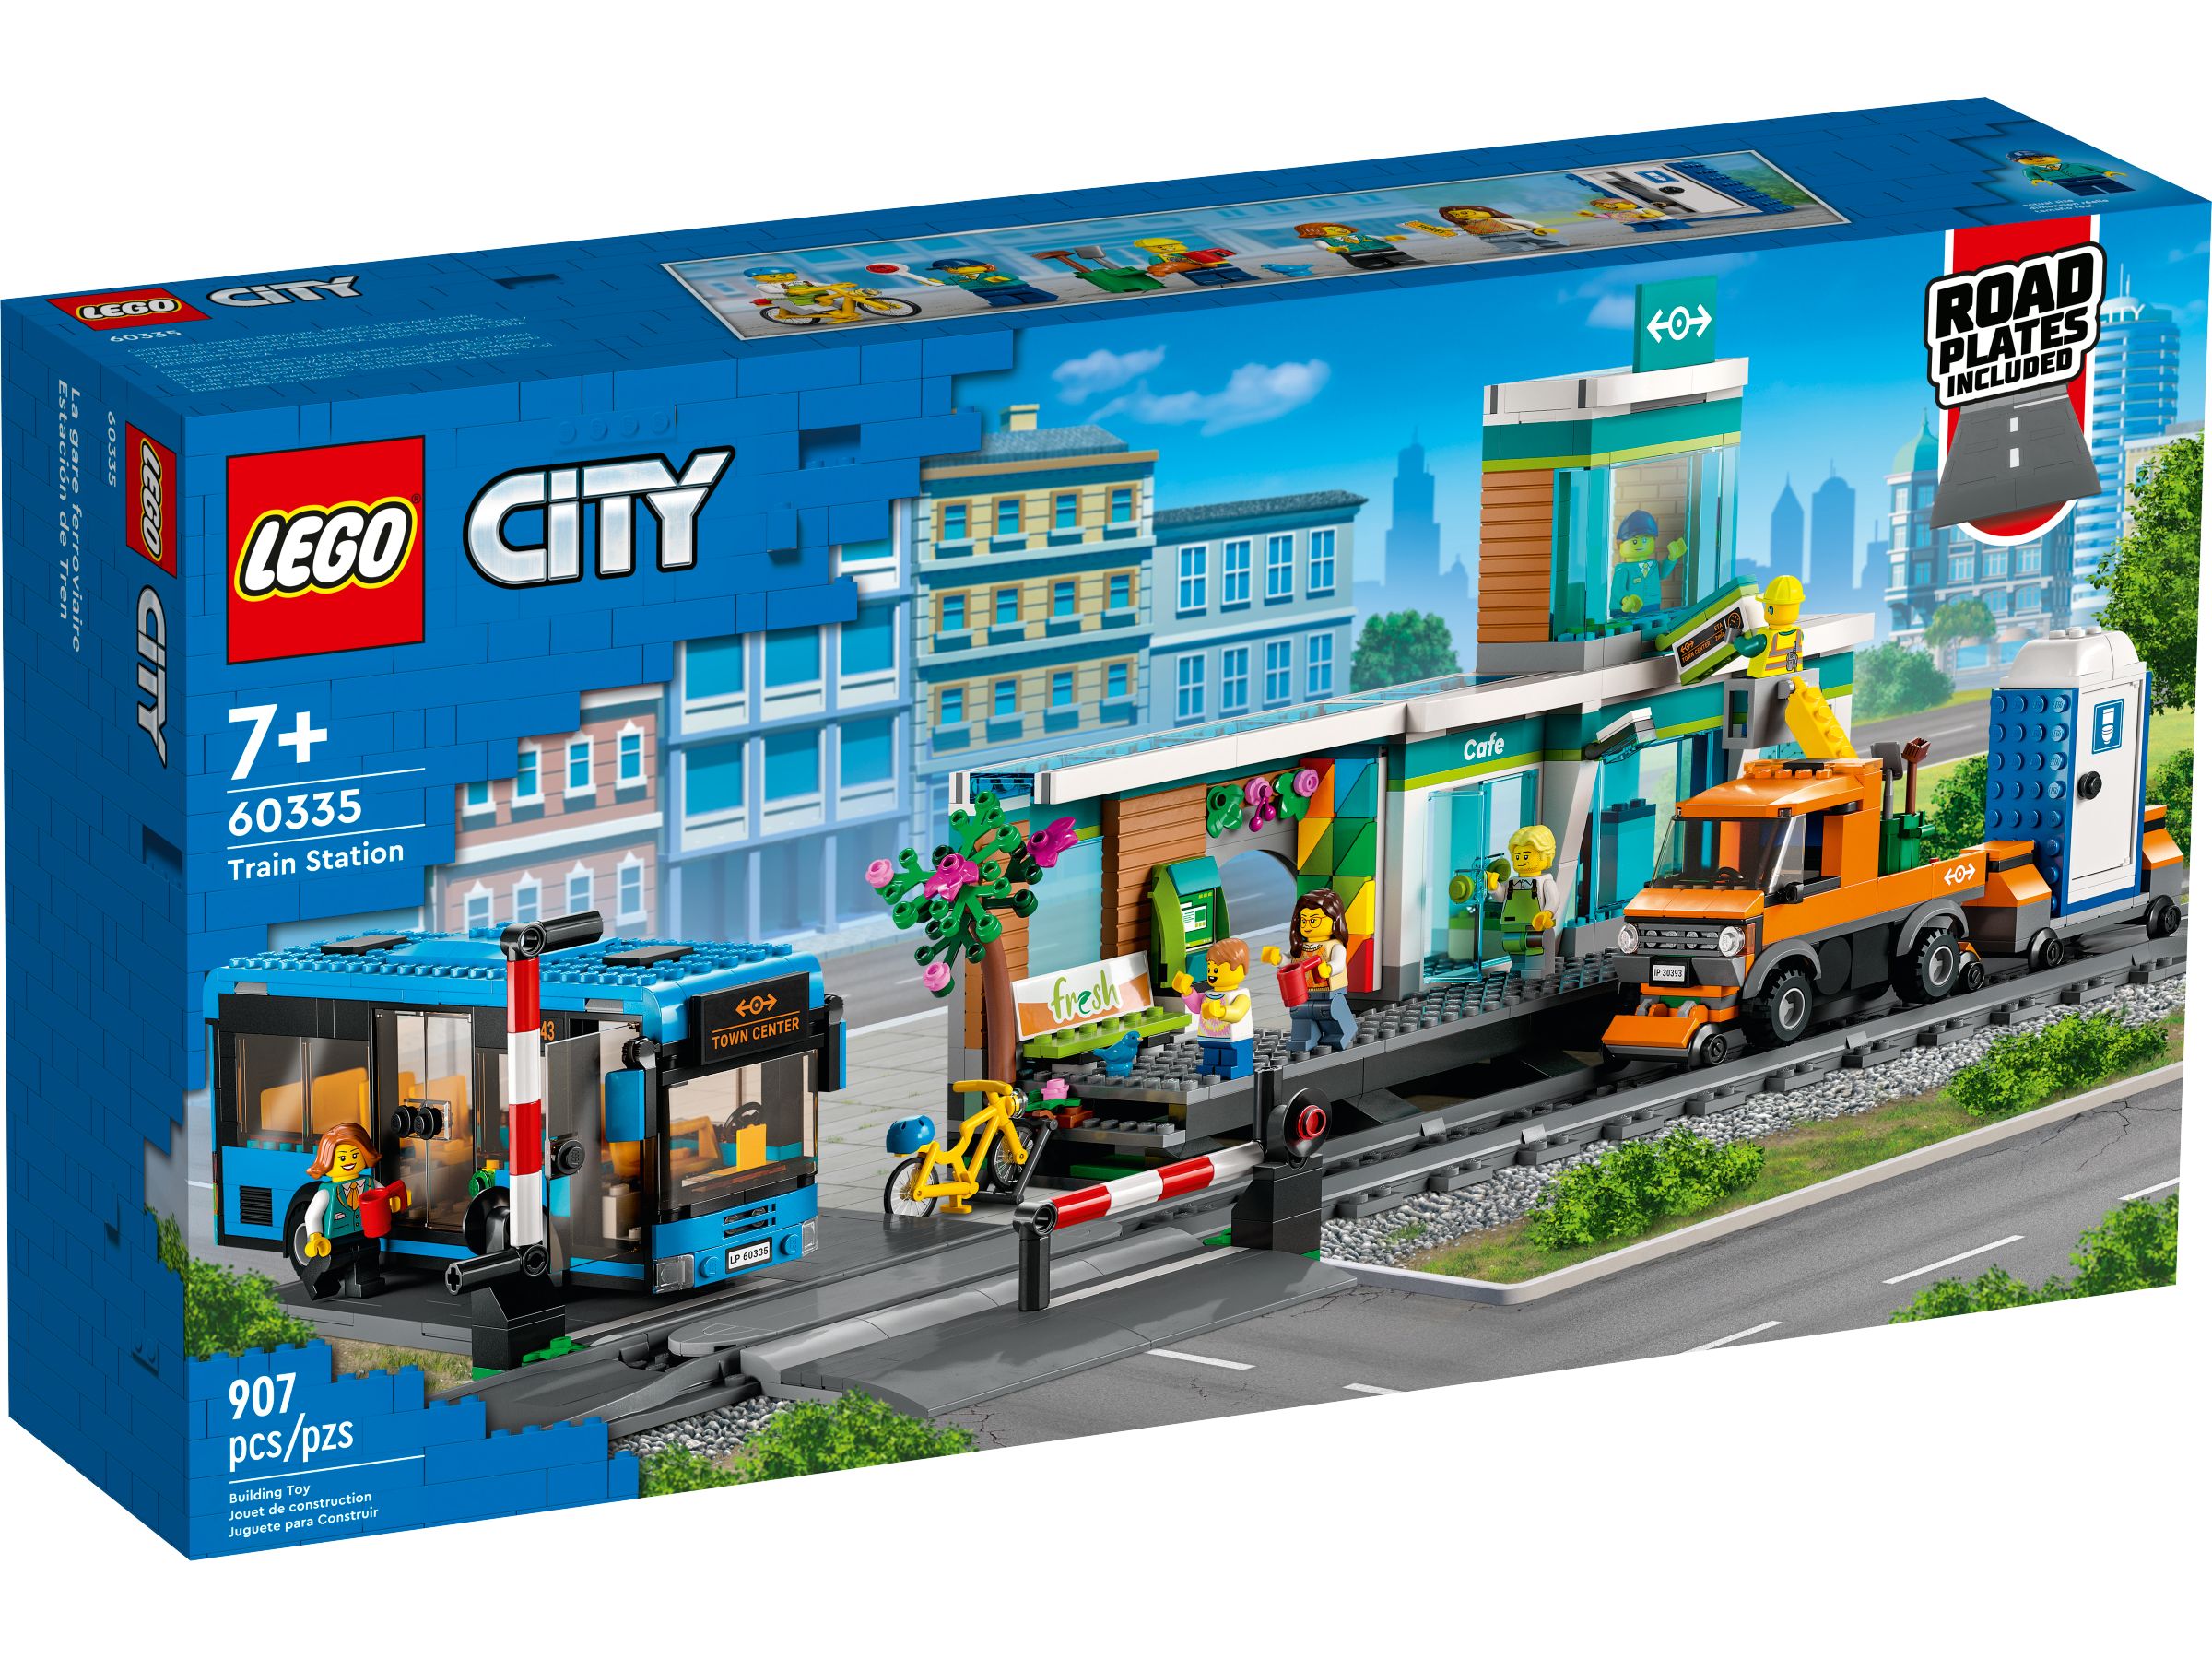 LEGO City 60335 Bahnhof LEGO_60335_alt1.jpg